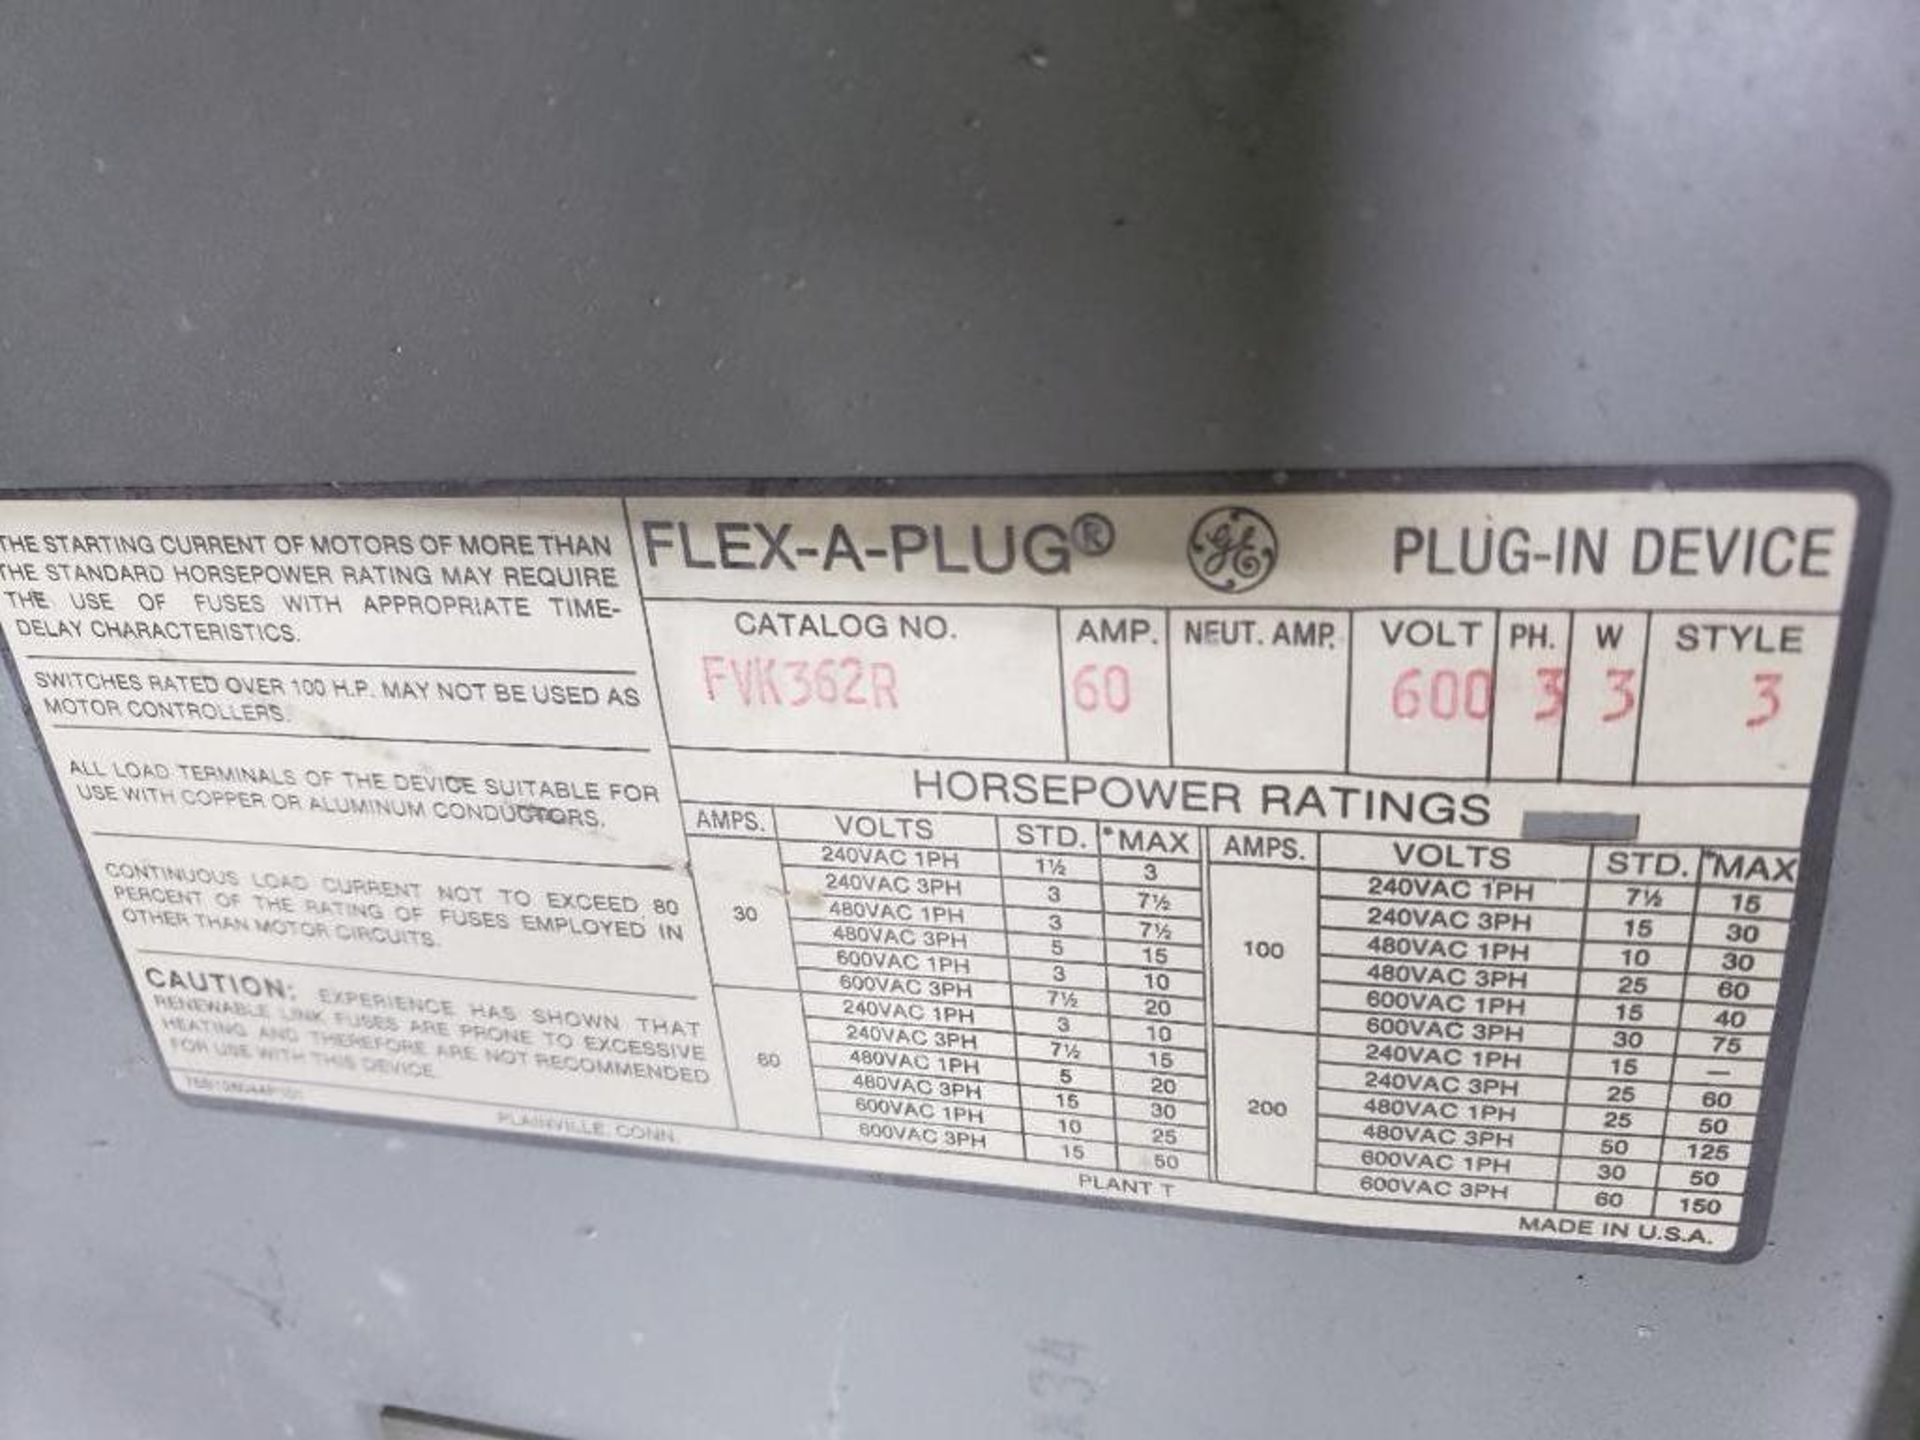 Qty 5 - GE Flex-A-Plus bus plug catalog FVK362R, 60amp, 600vac. - Image 3 of 5